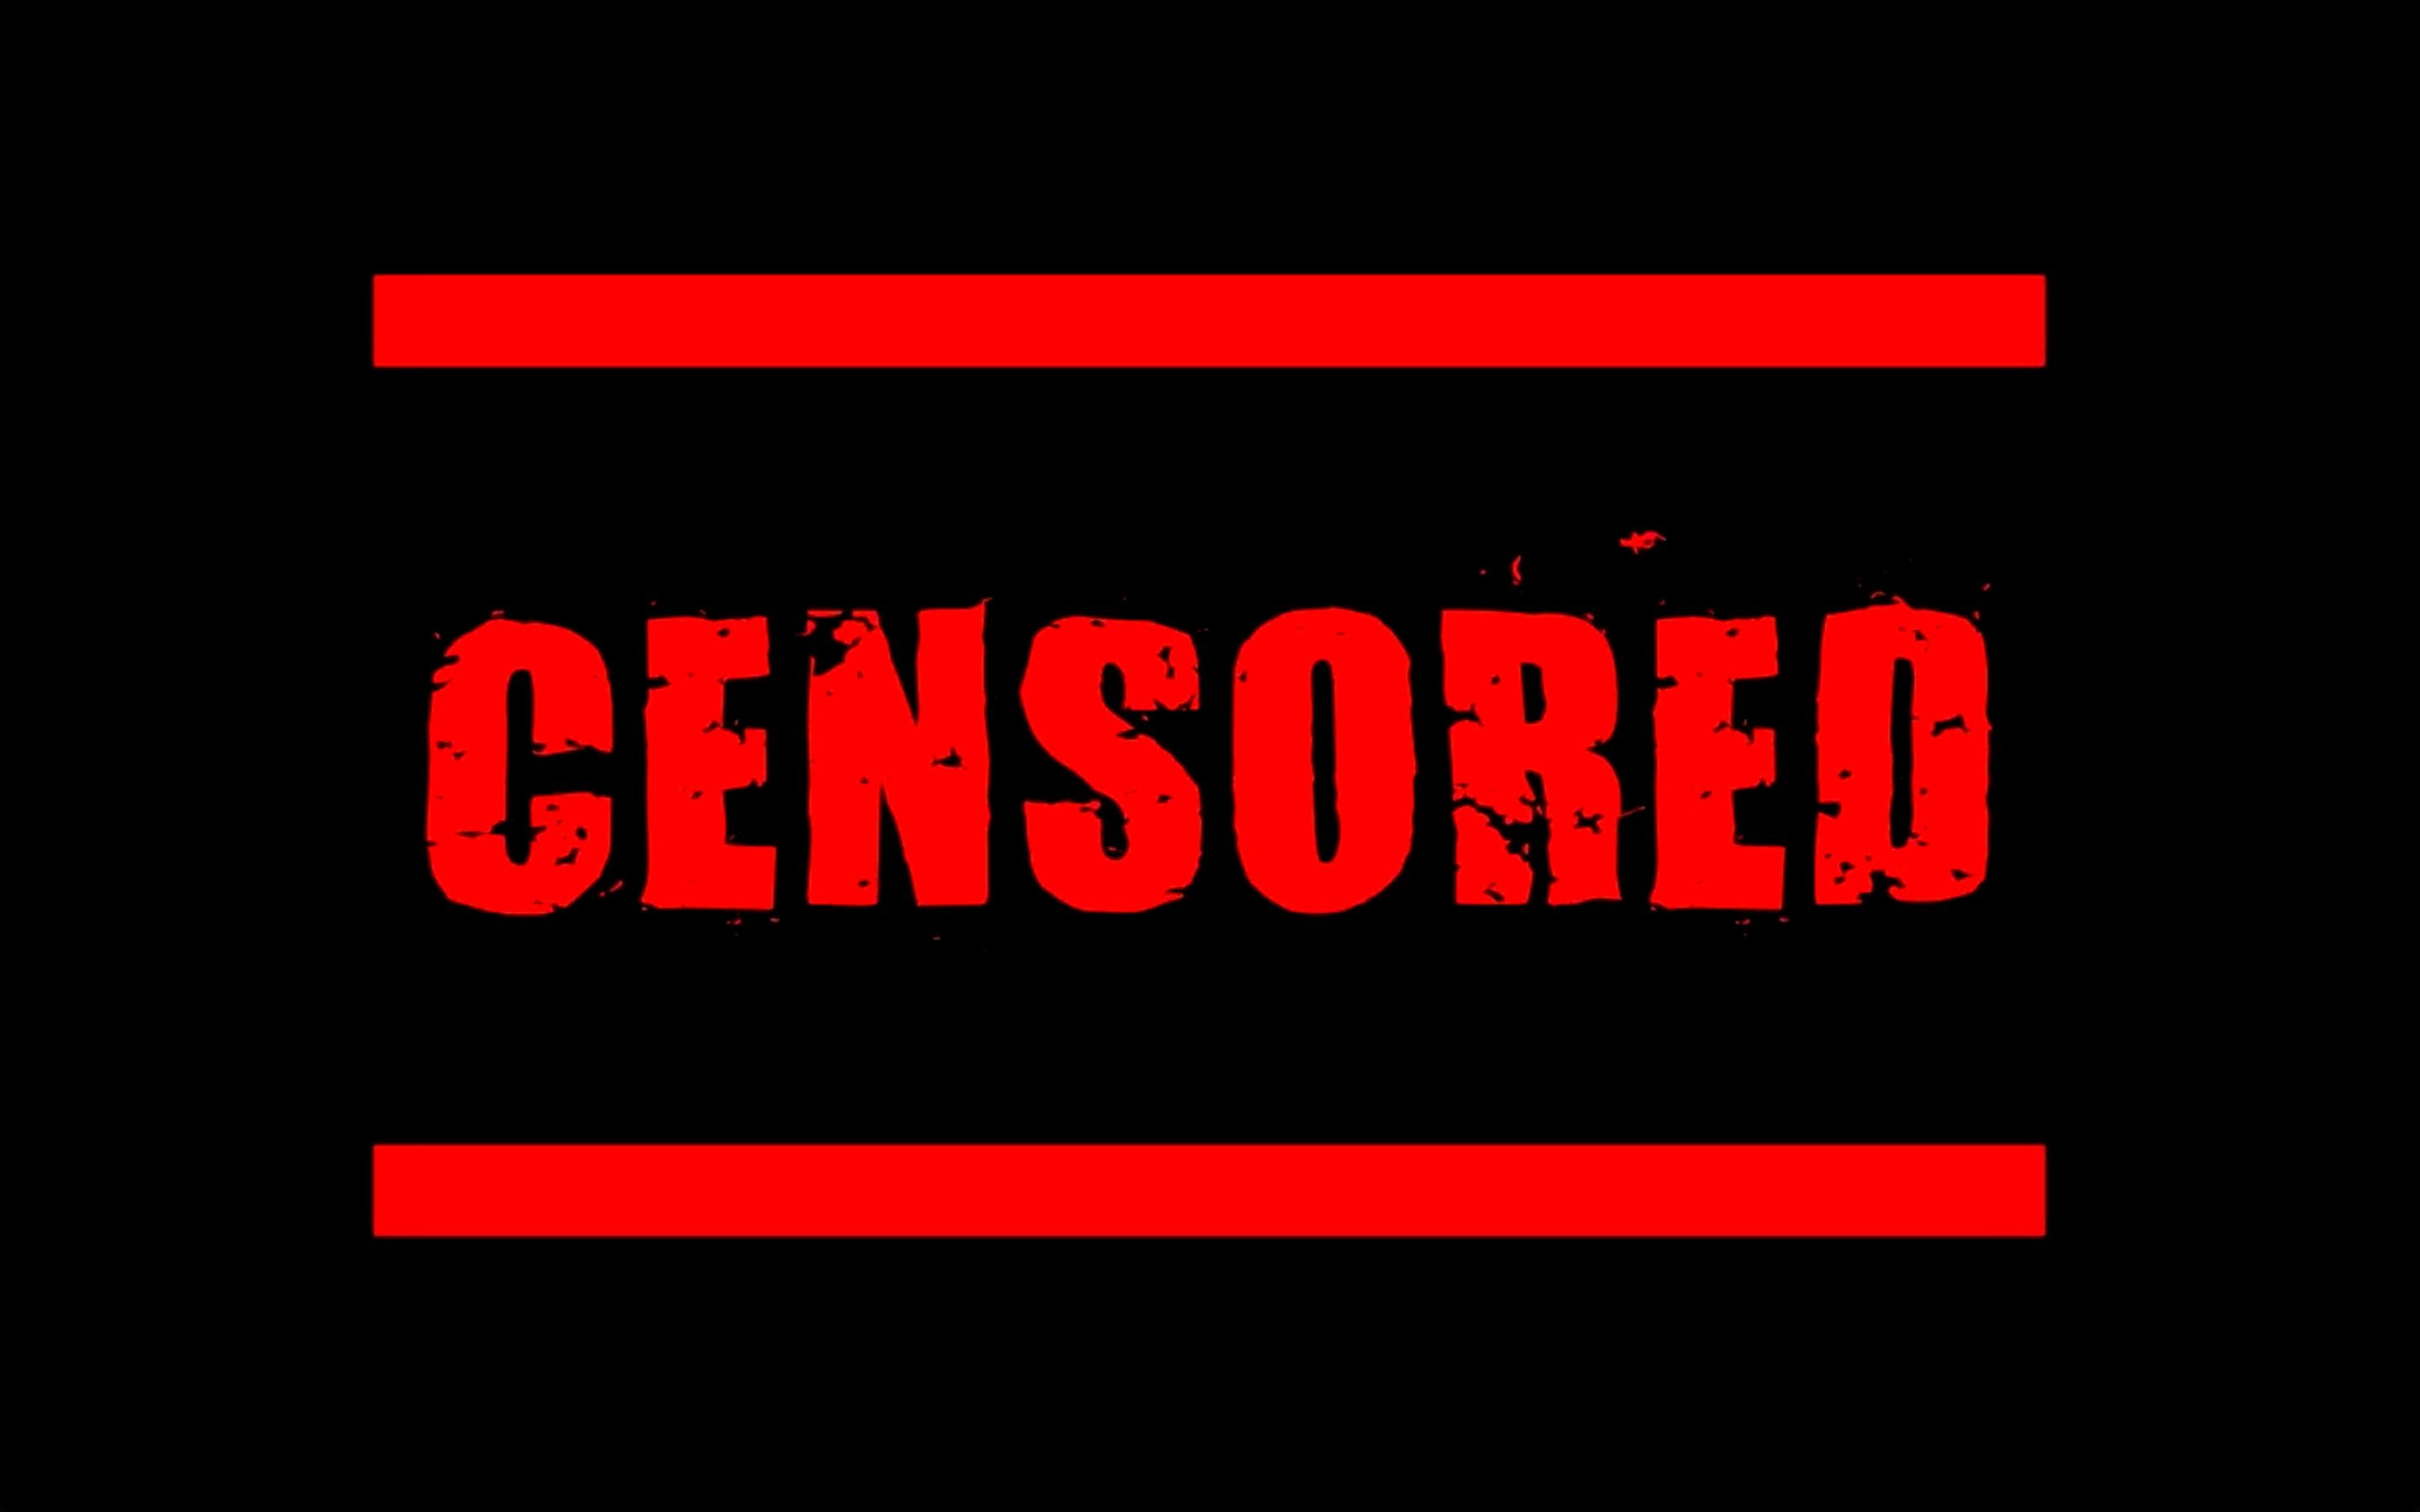 Цензура на первом. Цензура. Цензура картинка. Цензура надпись на черном фоне. Censored фото.